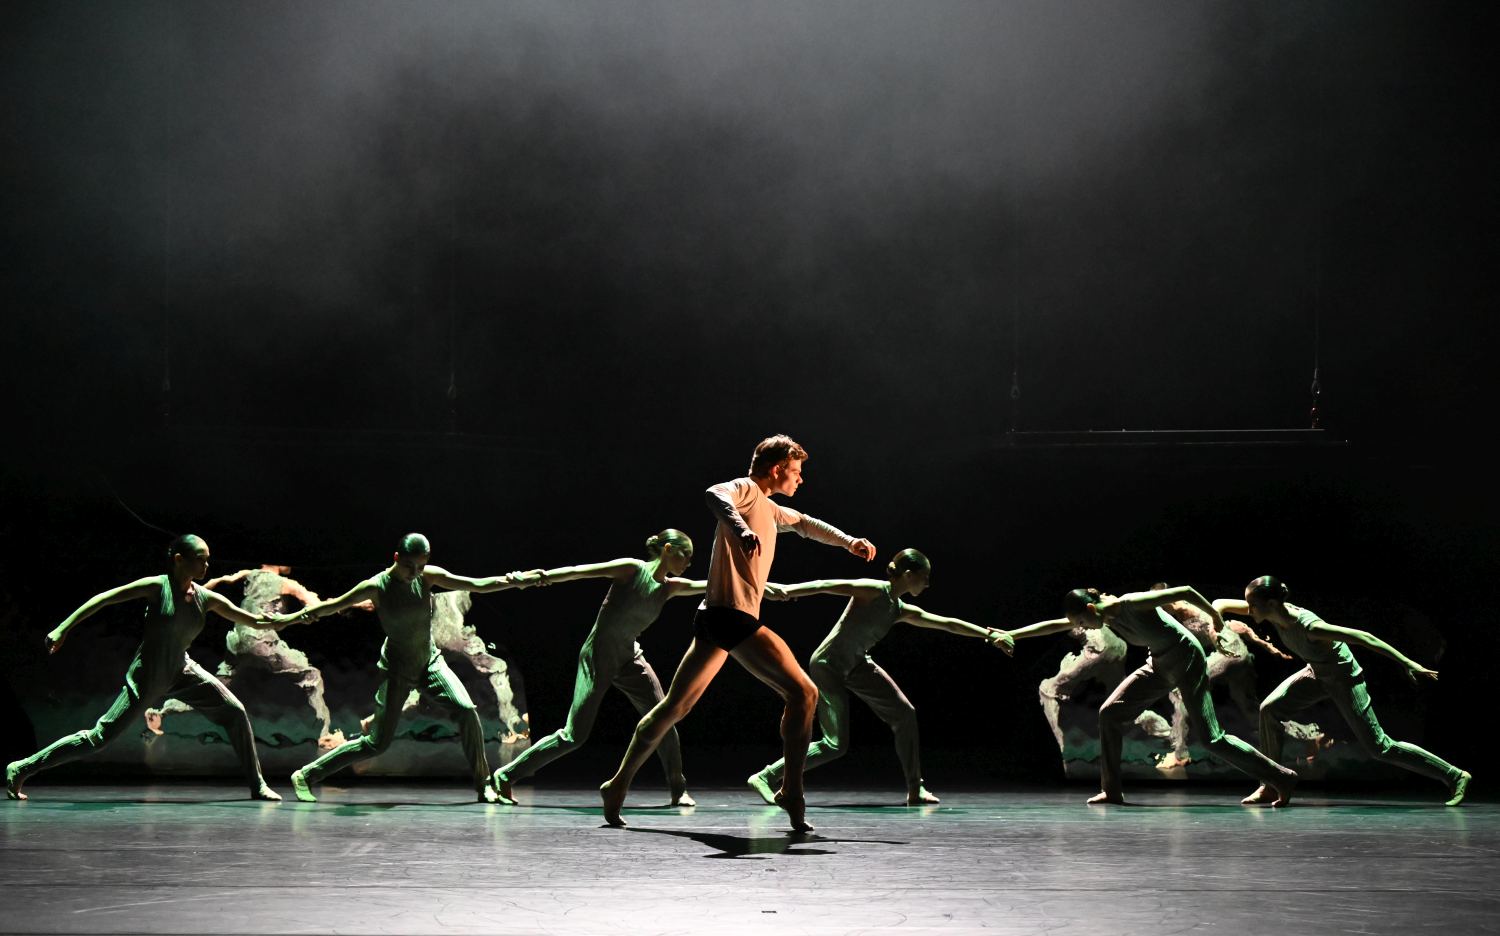 4. H.Erikson and ensemble, “Reflection/s” by R.Novitzky, Stuttgart Ballet 2022 © Stuttgart Ballet